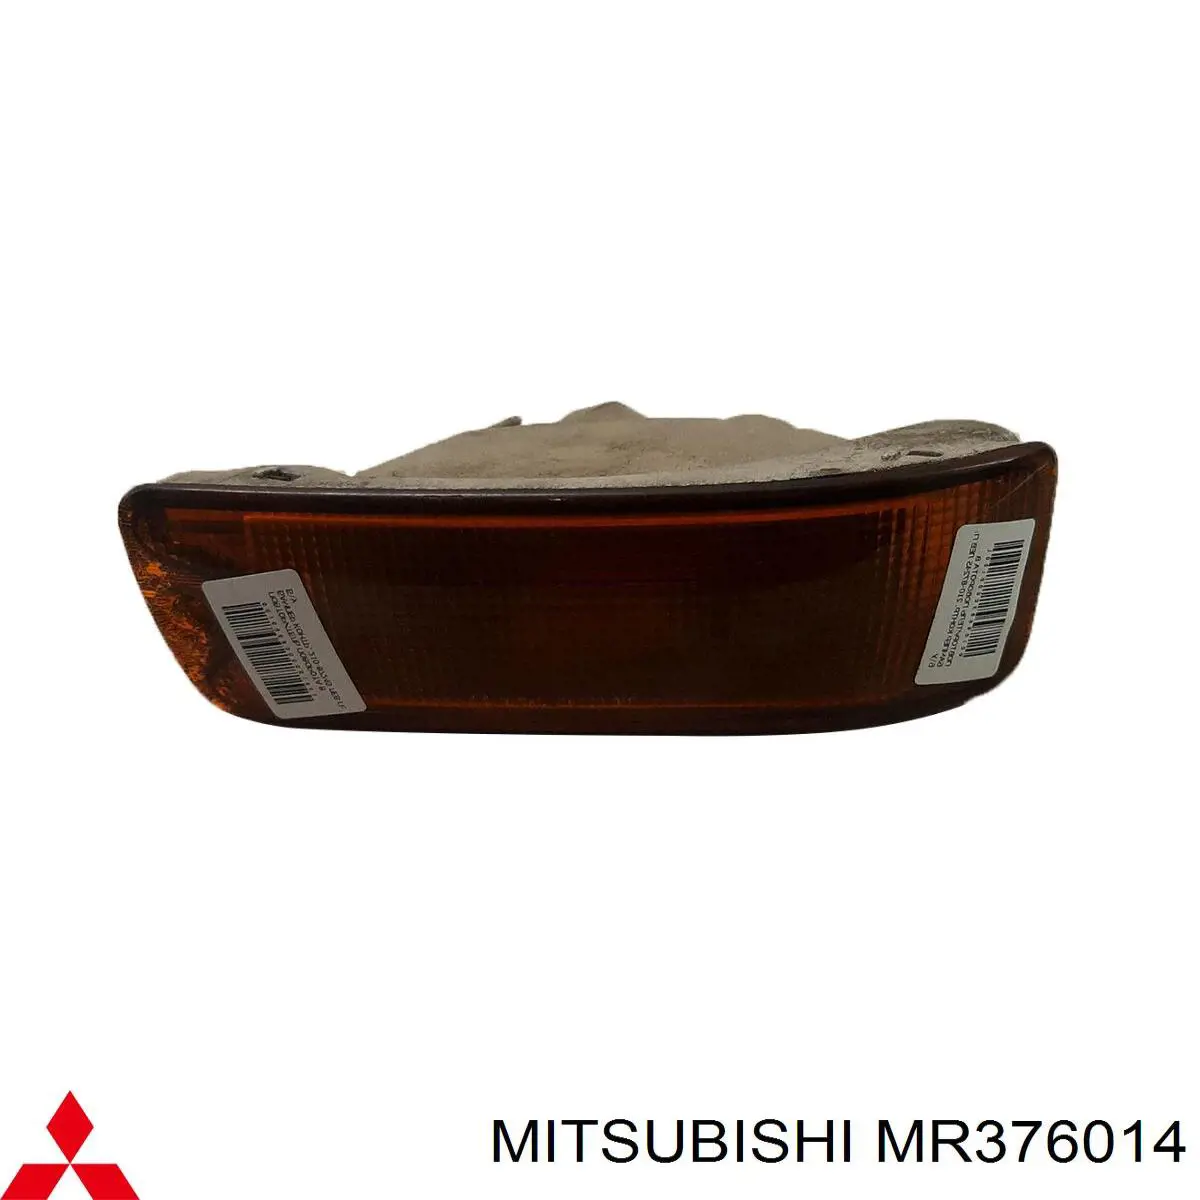 MR376014 Mitsubishi указатель поворота правый